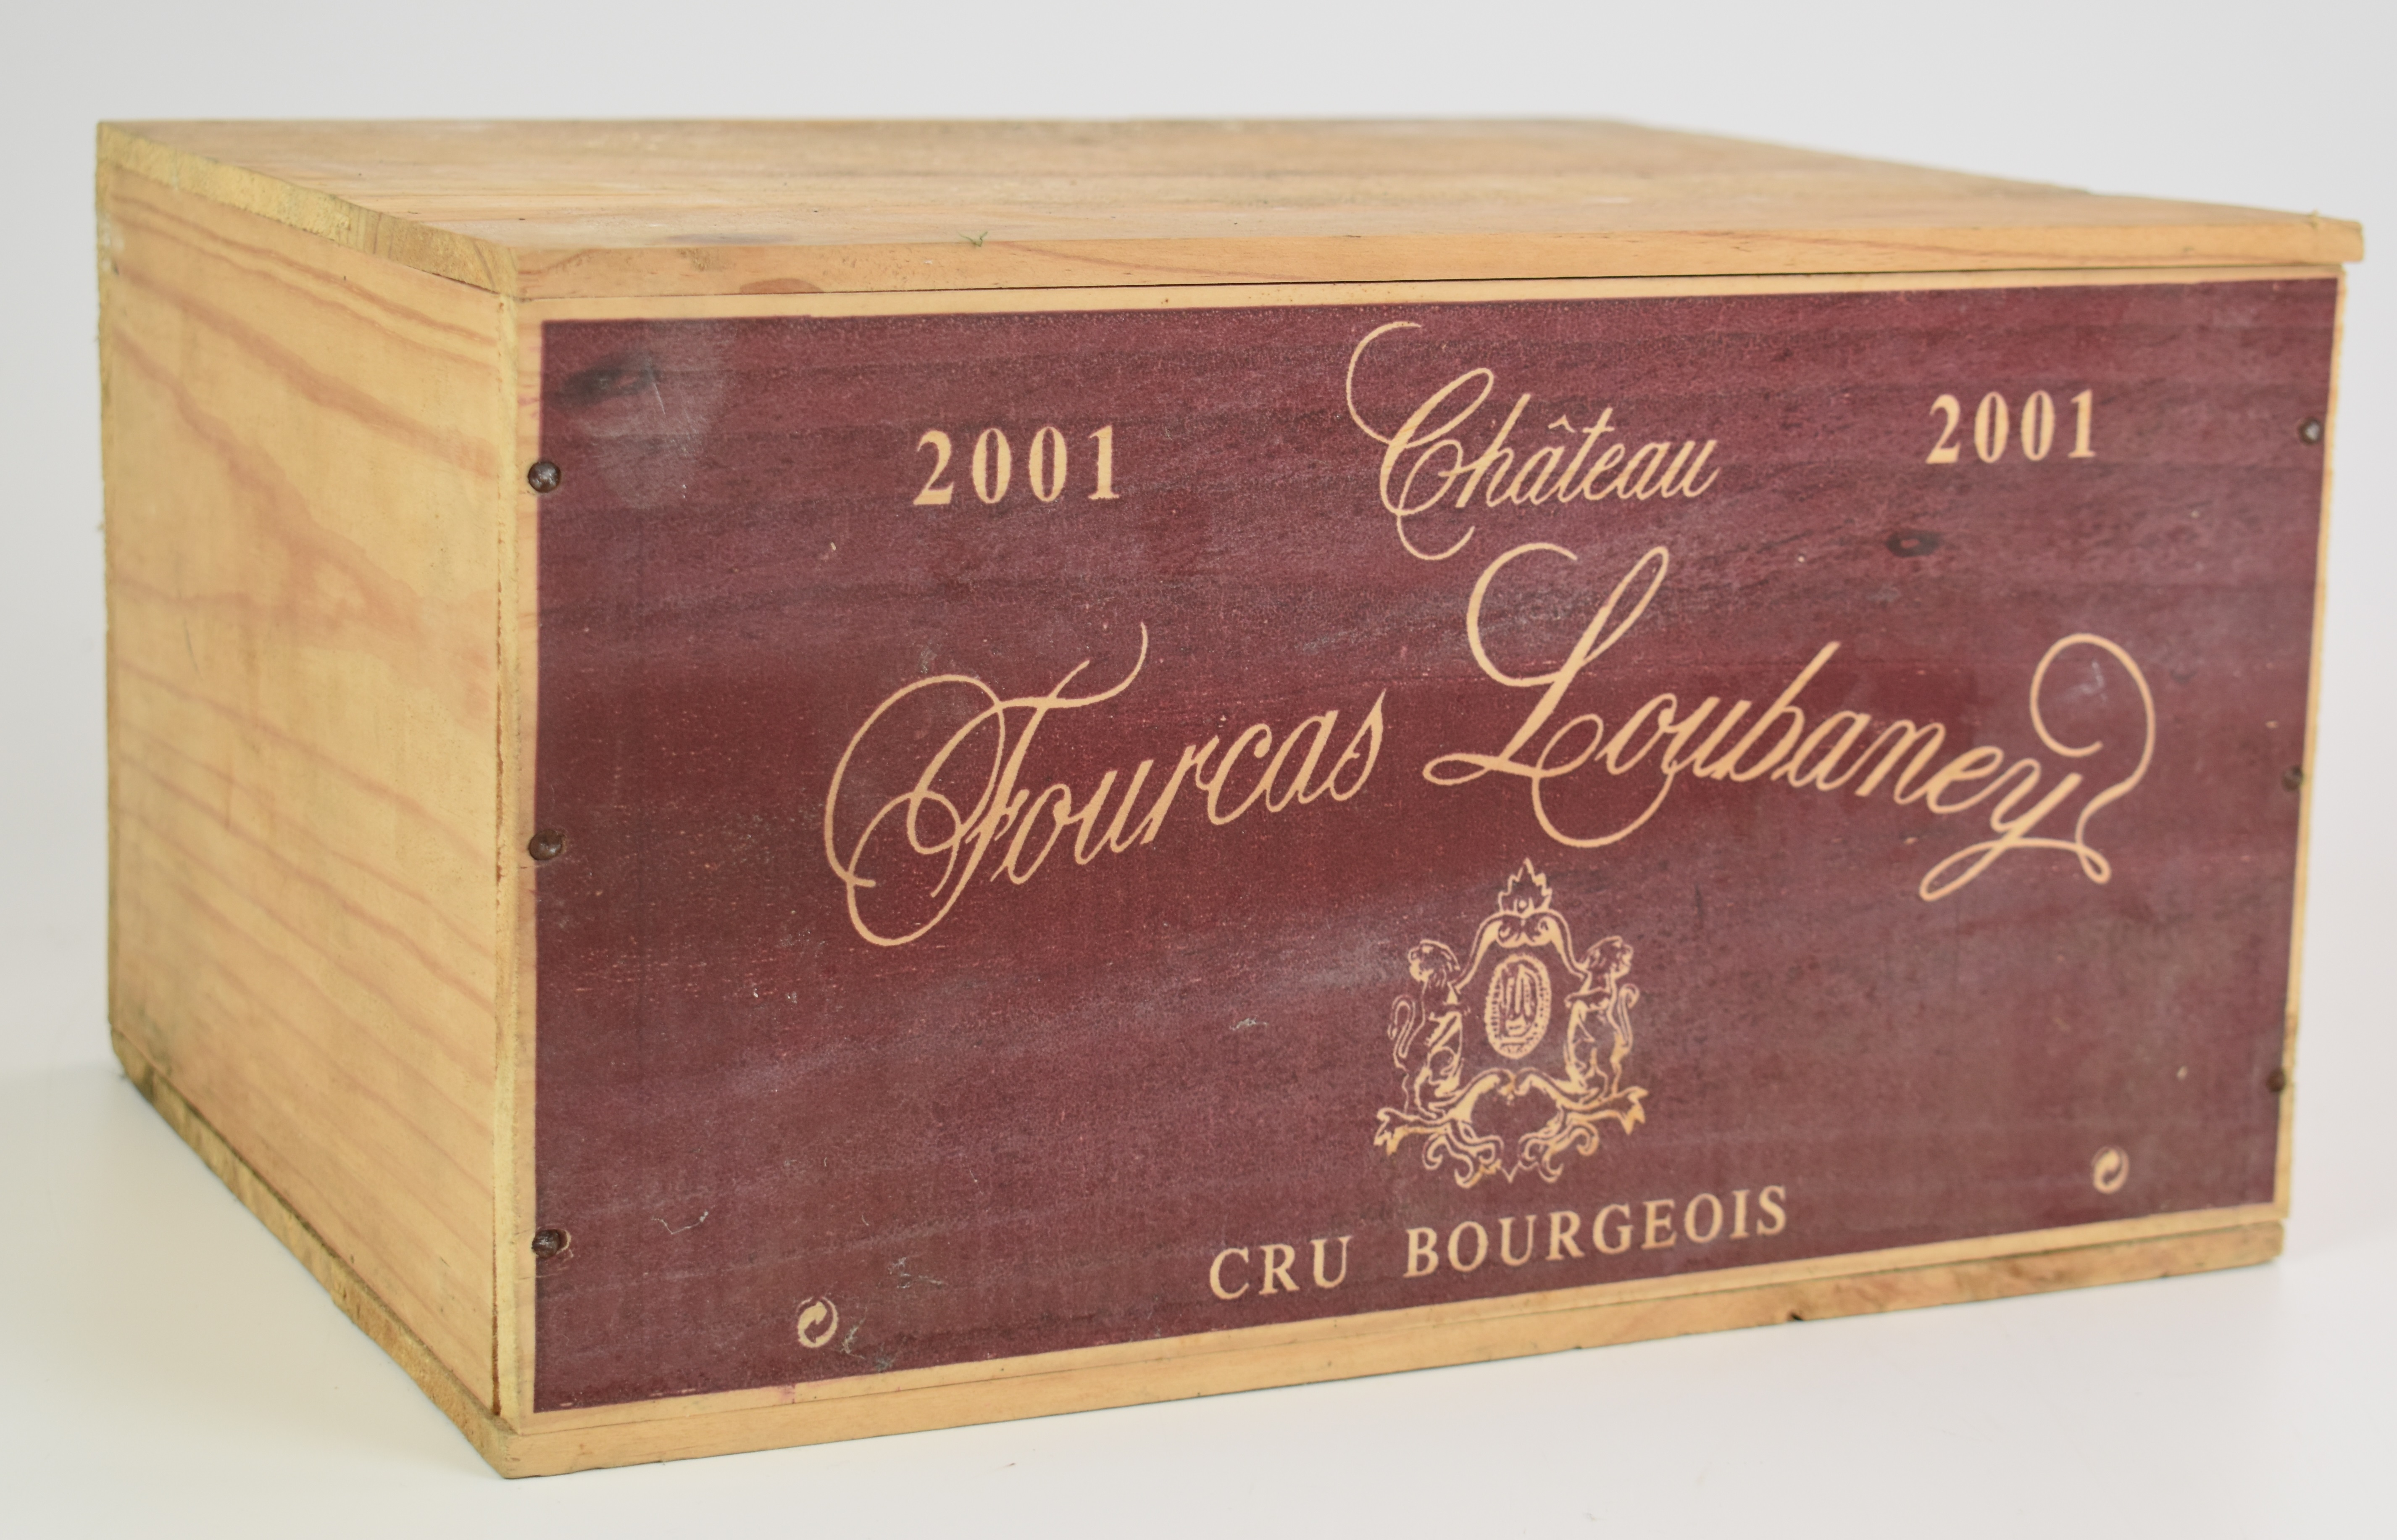 Case of six bottles of Chateau Fourcas Loubaney Cru Bourgeois 2001